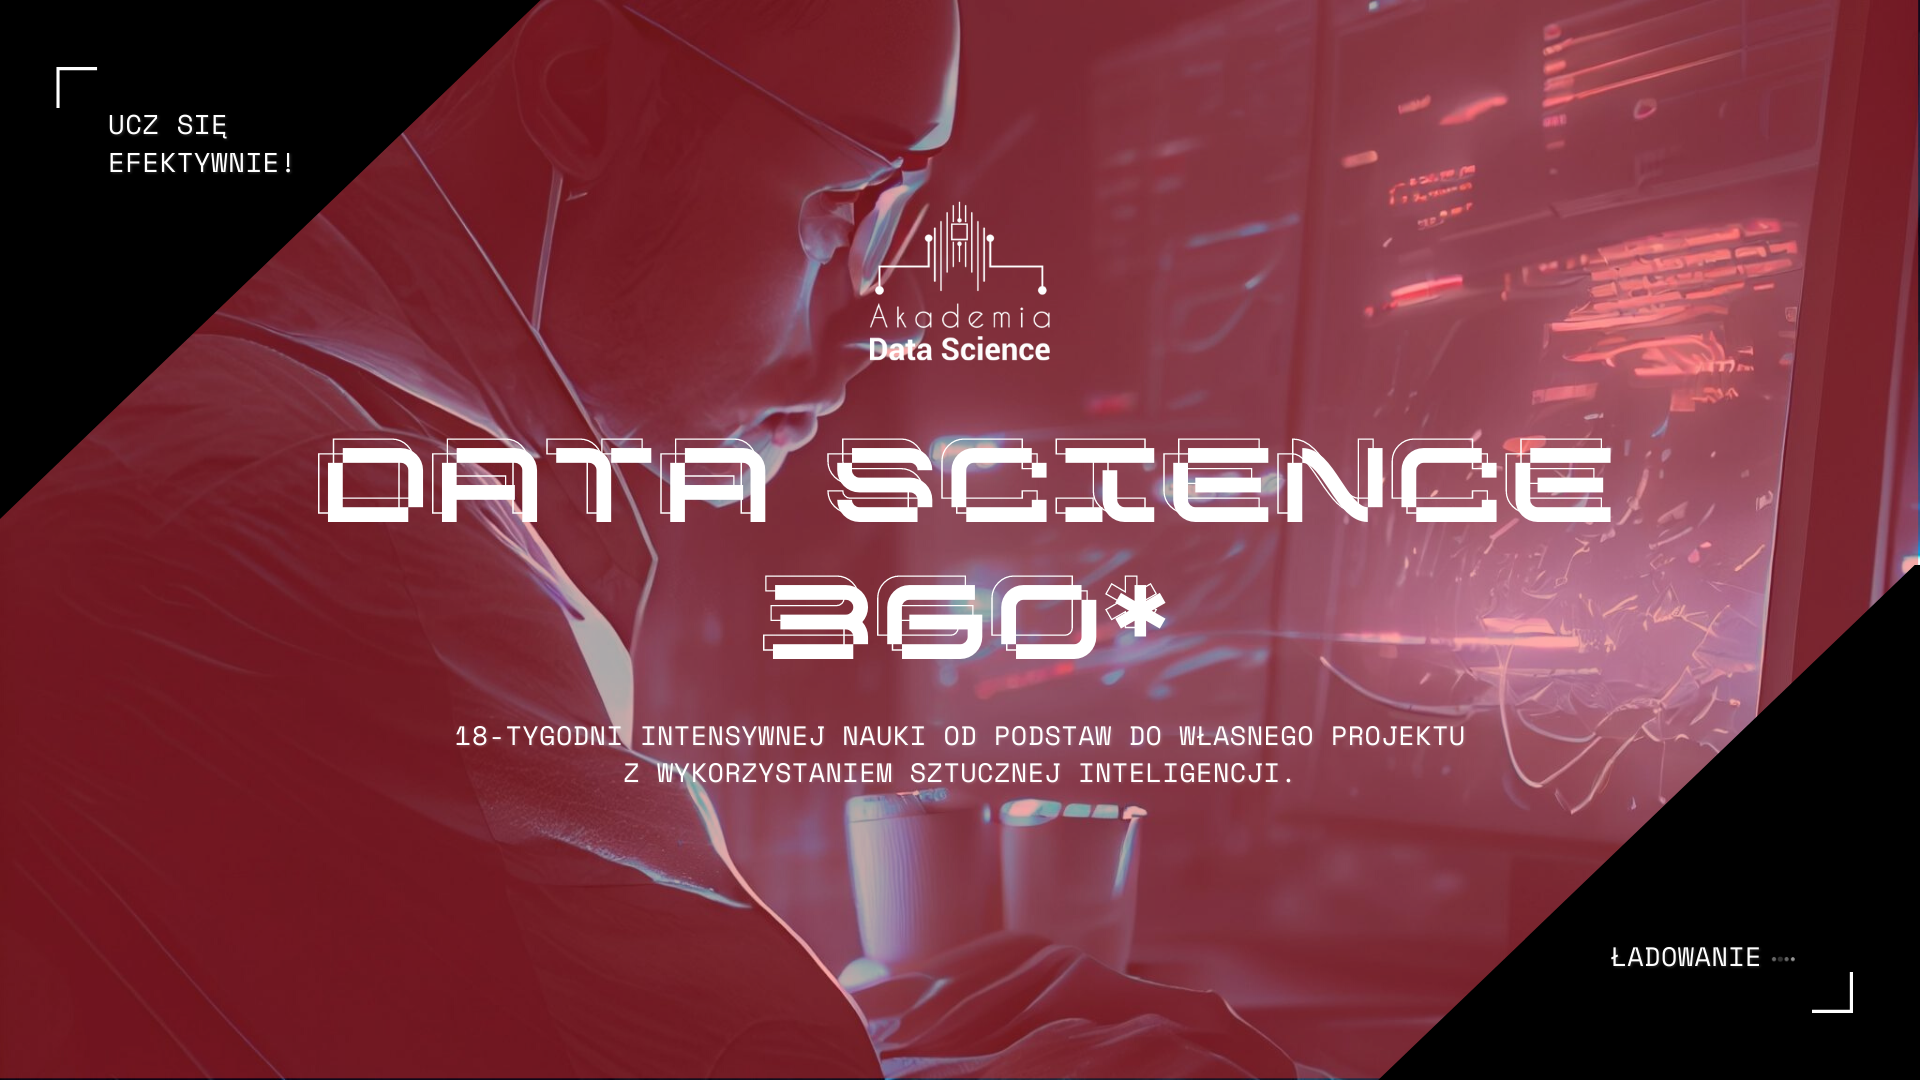 Data Science 360*